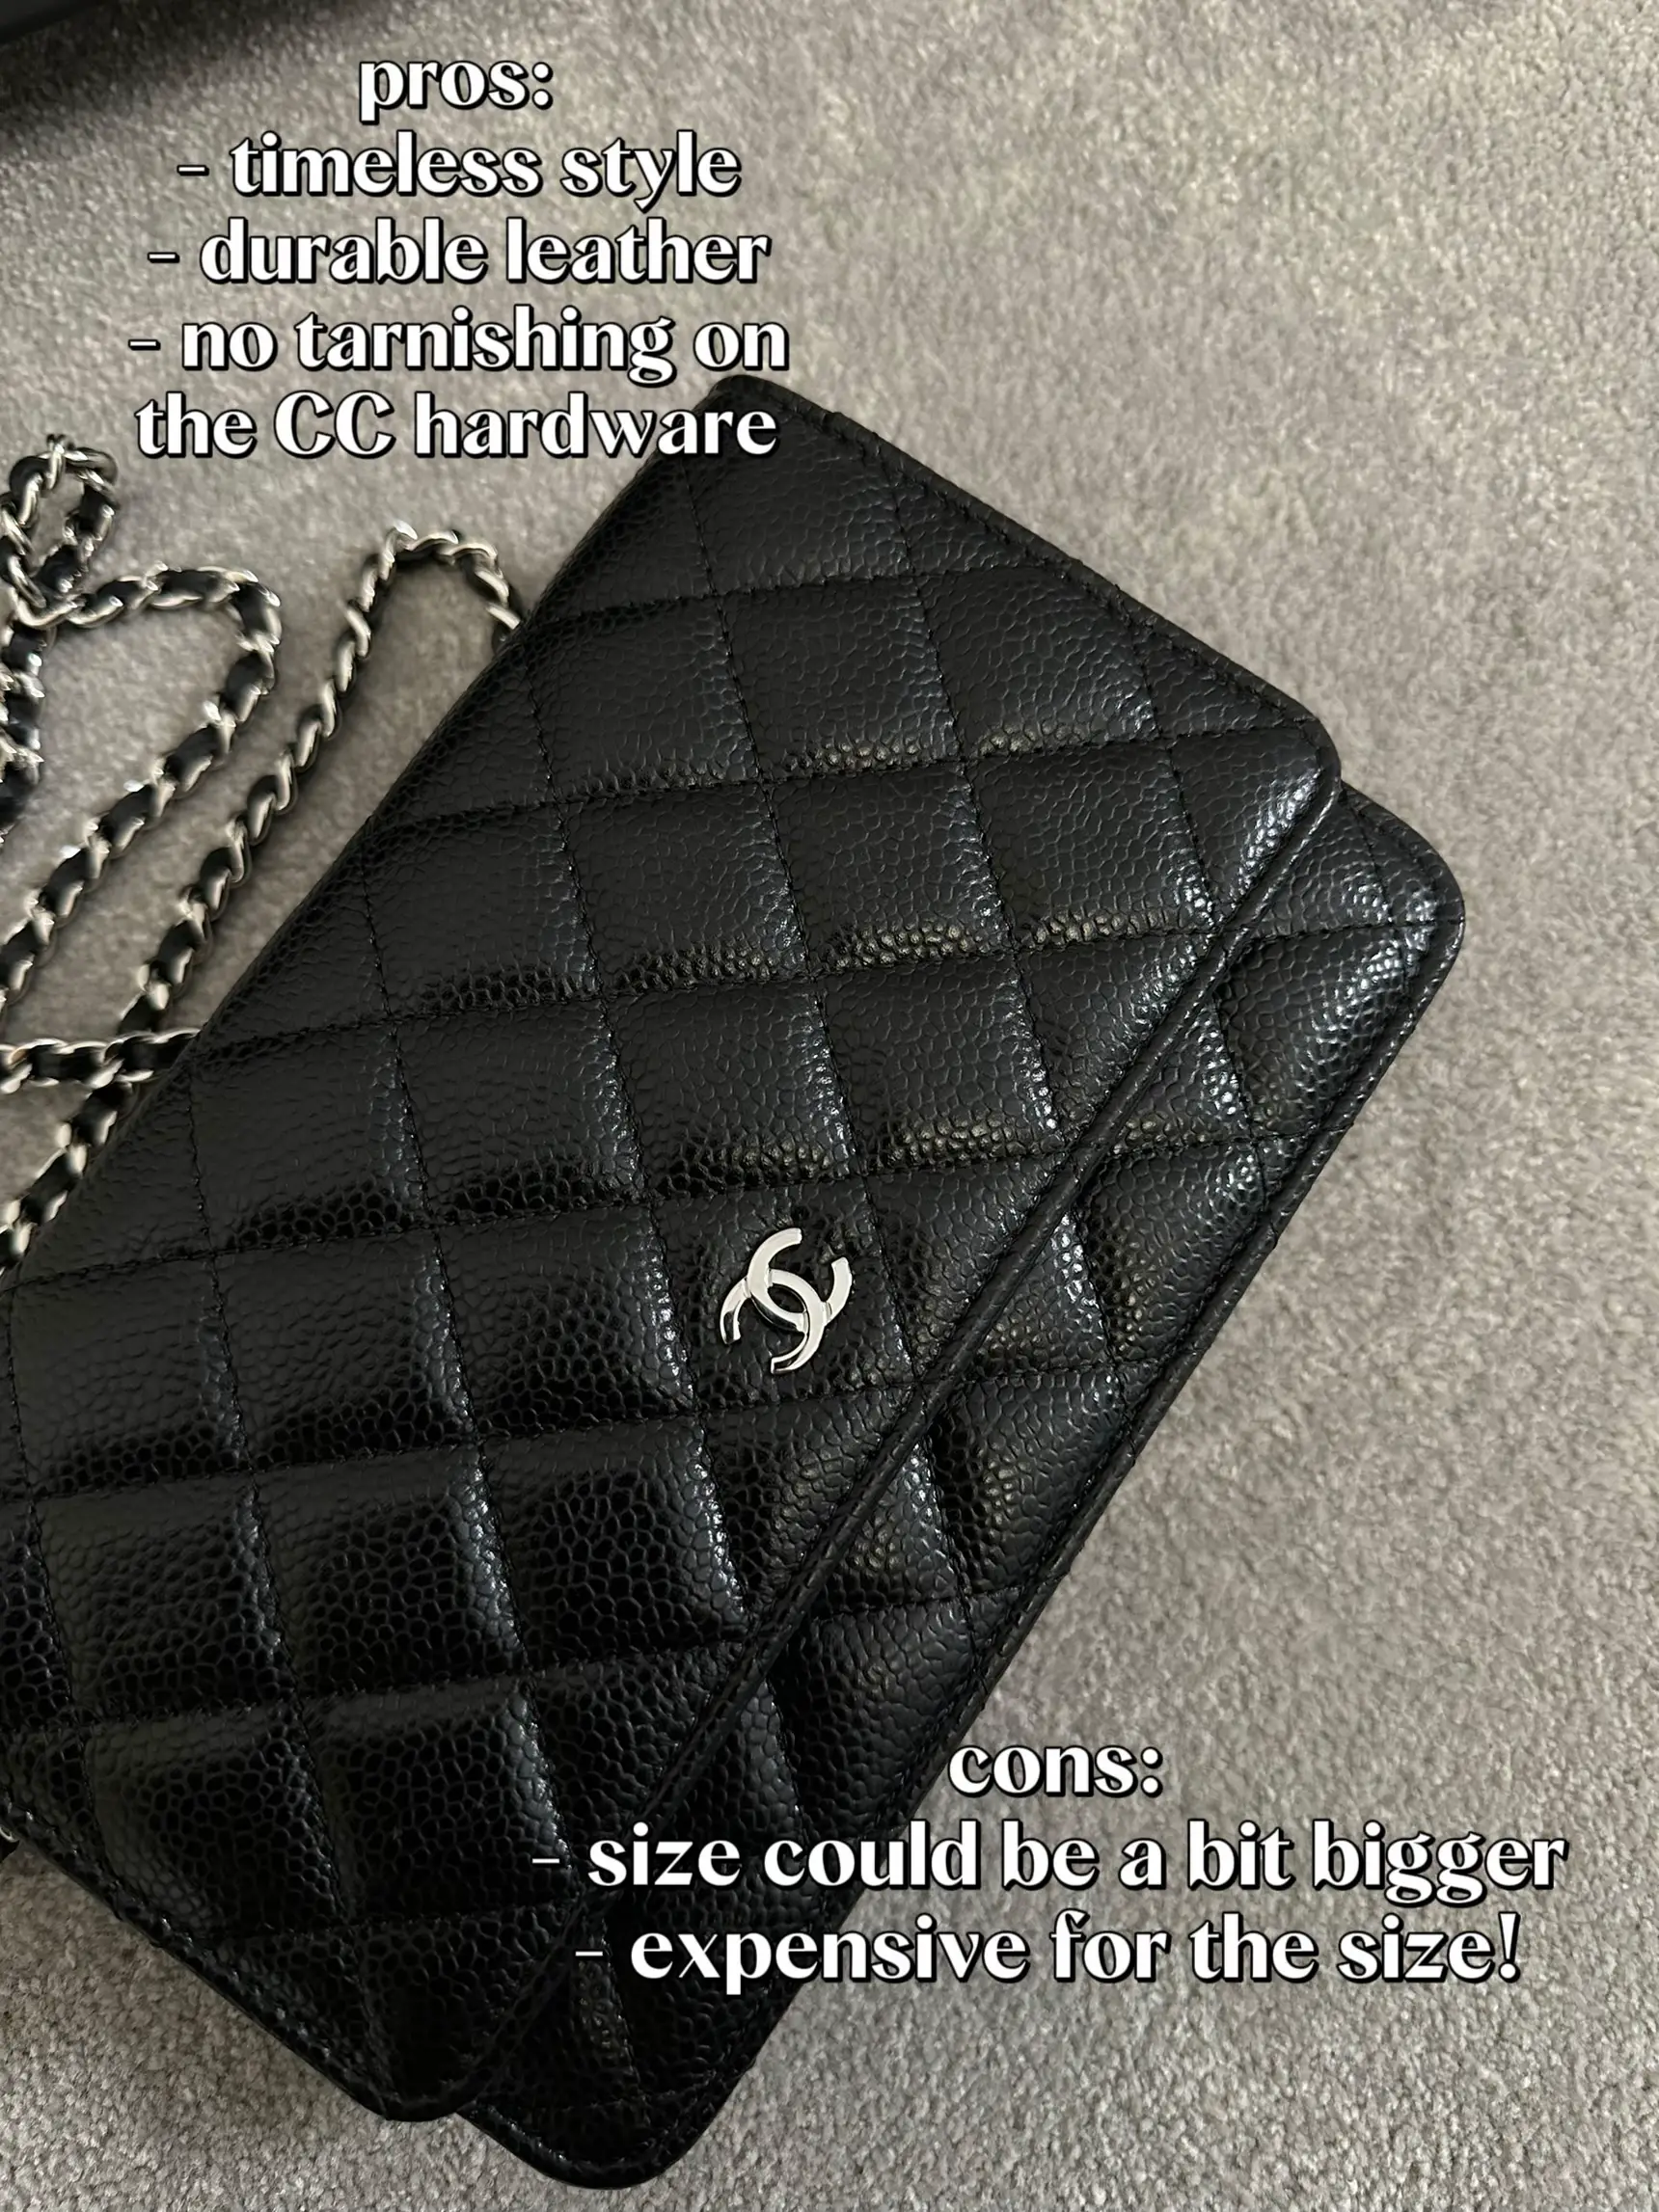 Chanel 2.55 Reissue Mini Flap Shoulder Bag Metallic Midnight Blue